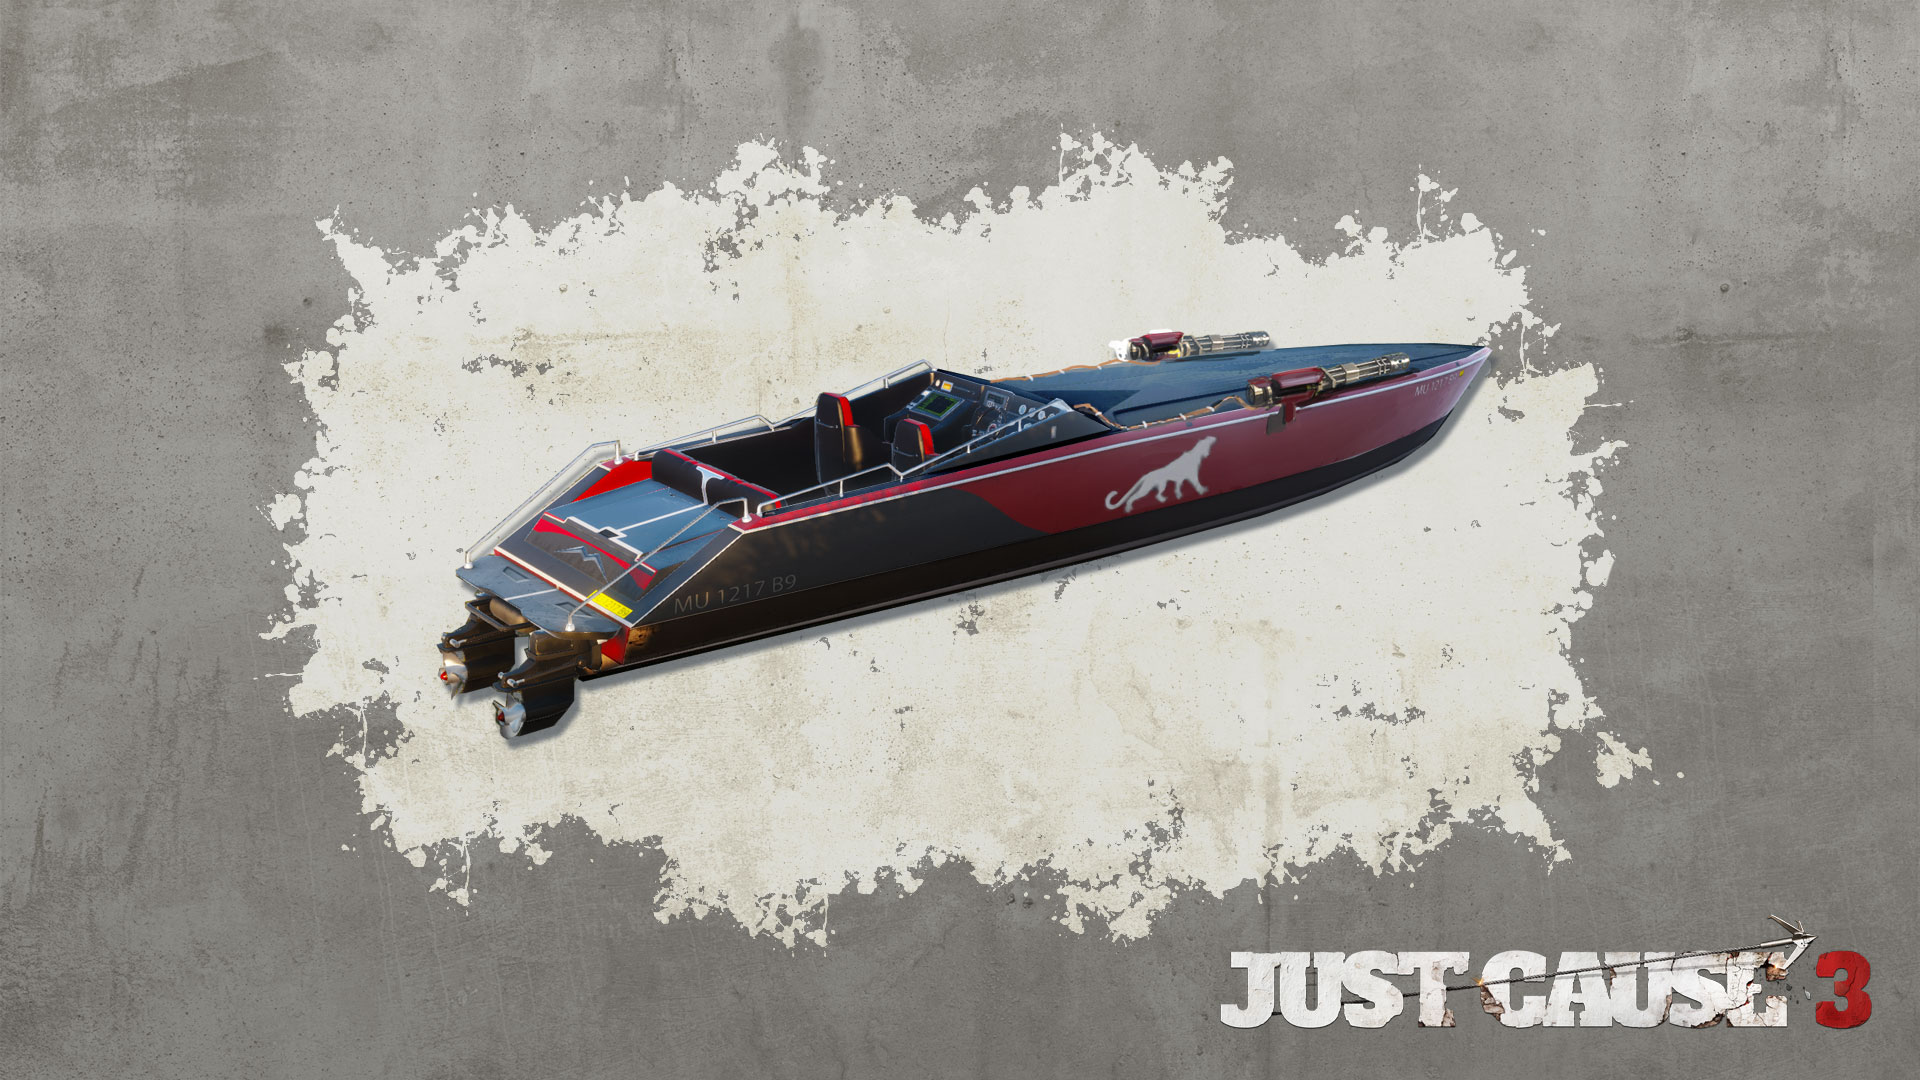 Just Cause 3 - Mini-Gun Racing Boat DLC Steam CD Key, $1.56